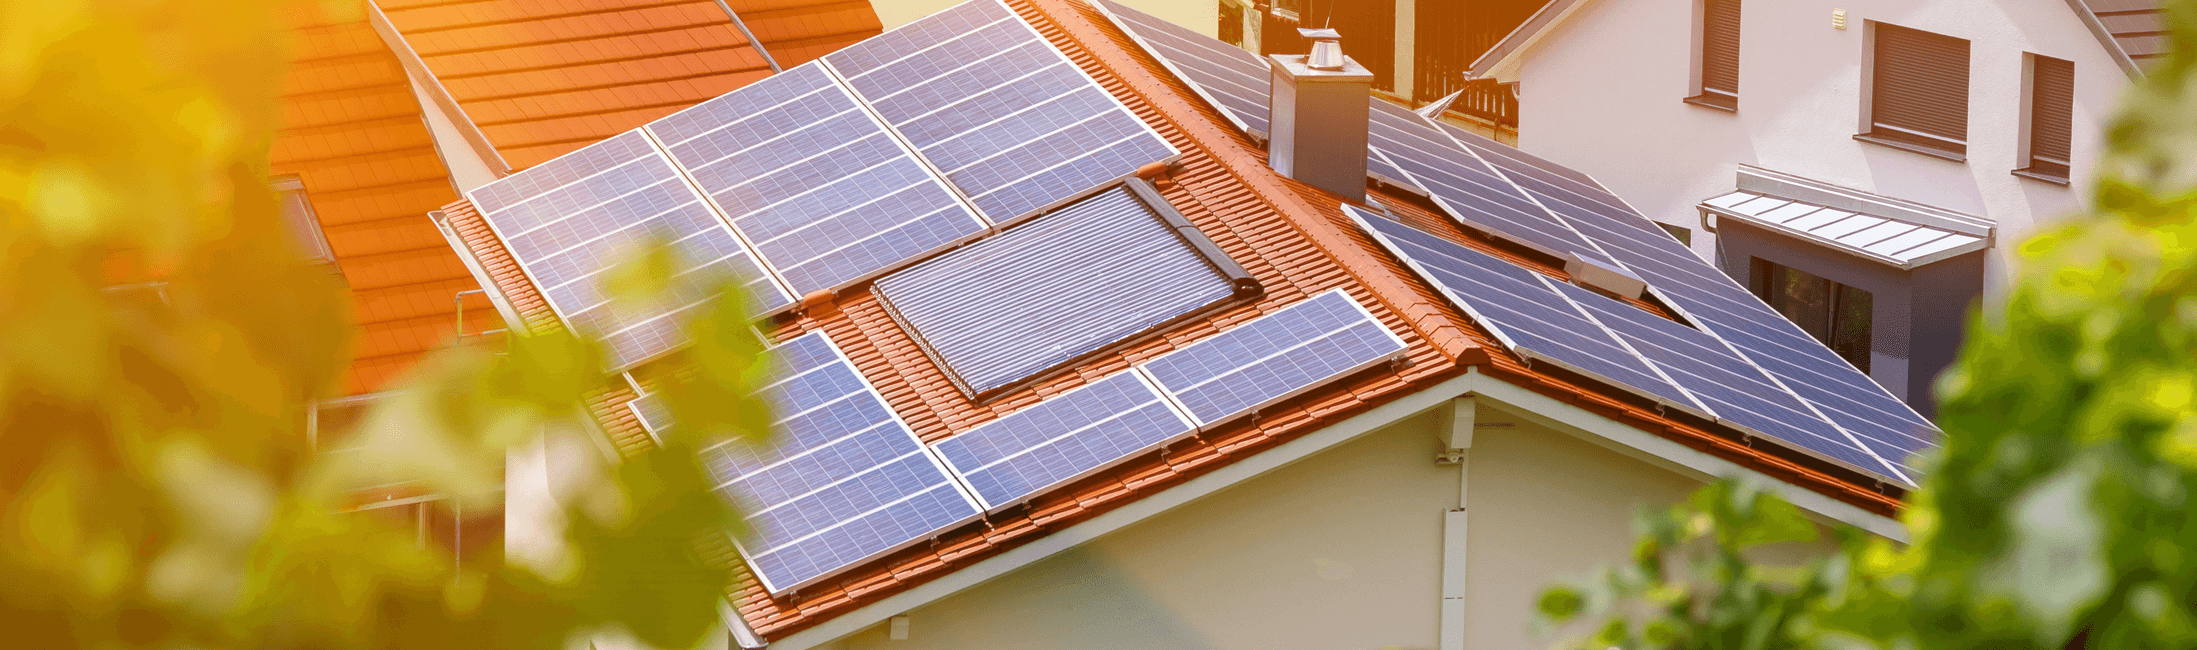 Solar Panel Maintenance: Tips to maximize solar system output